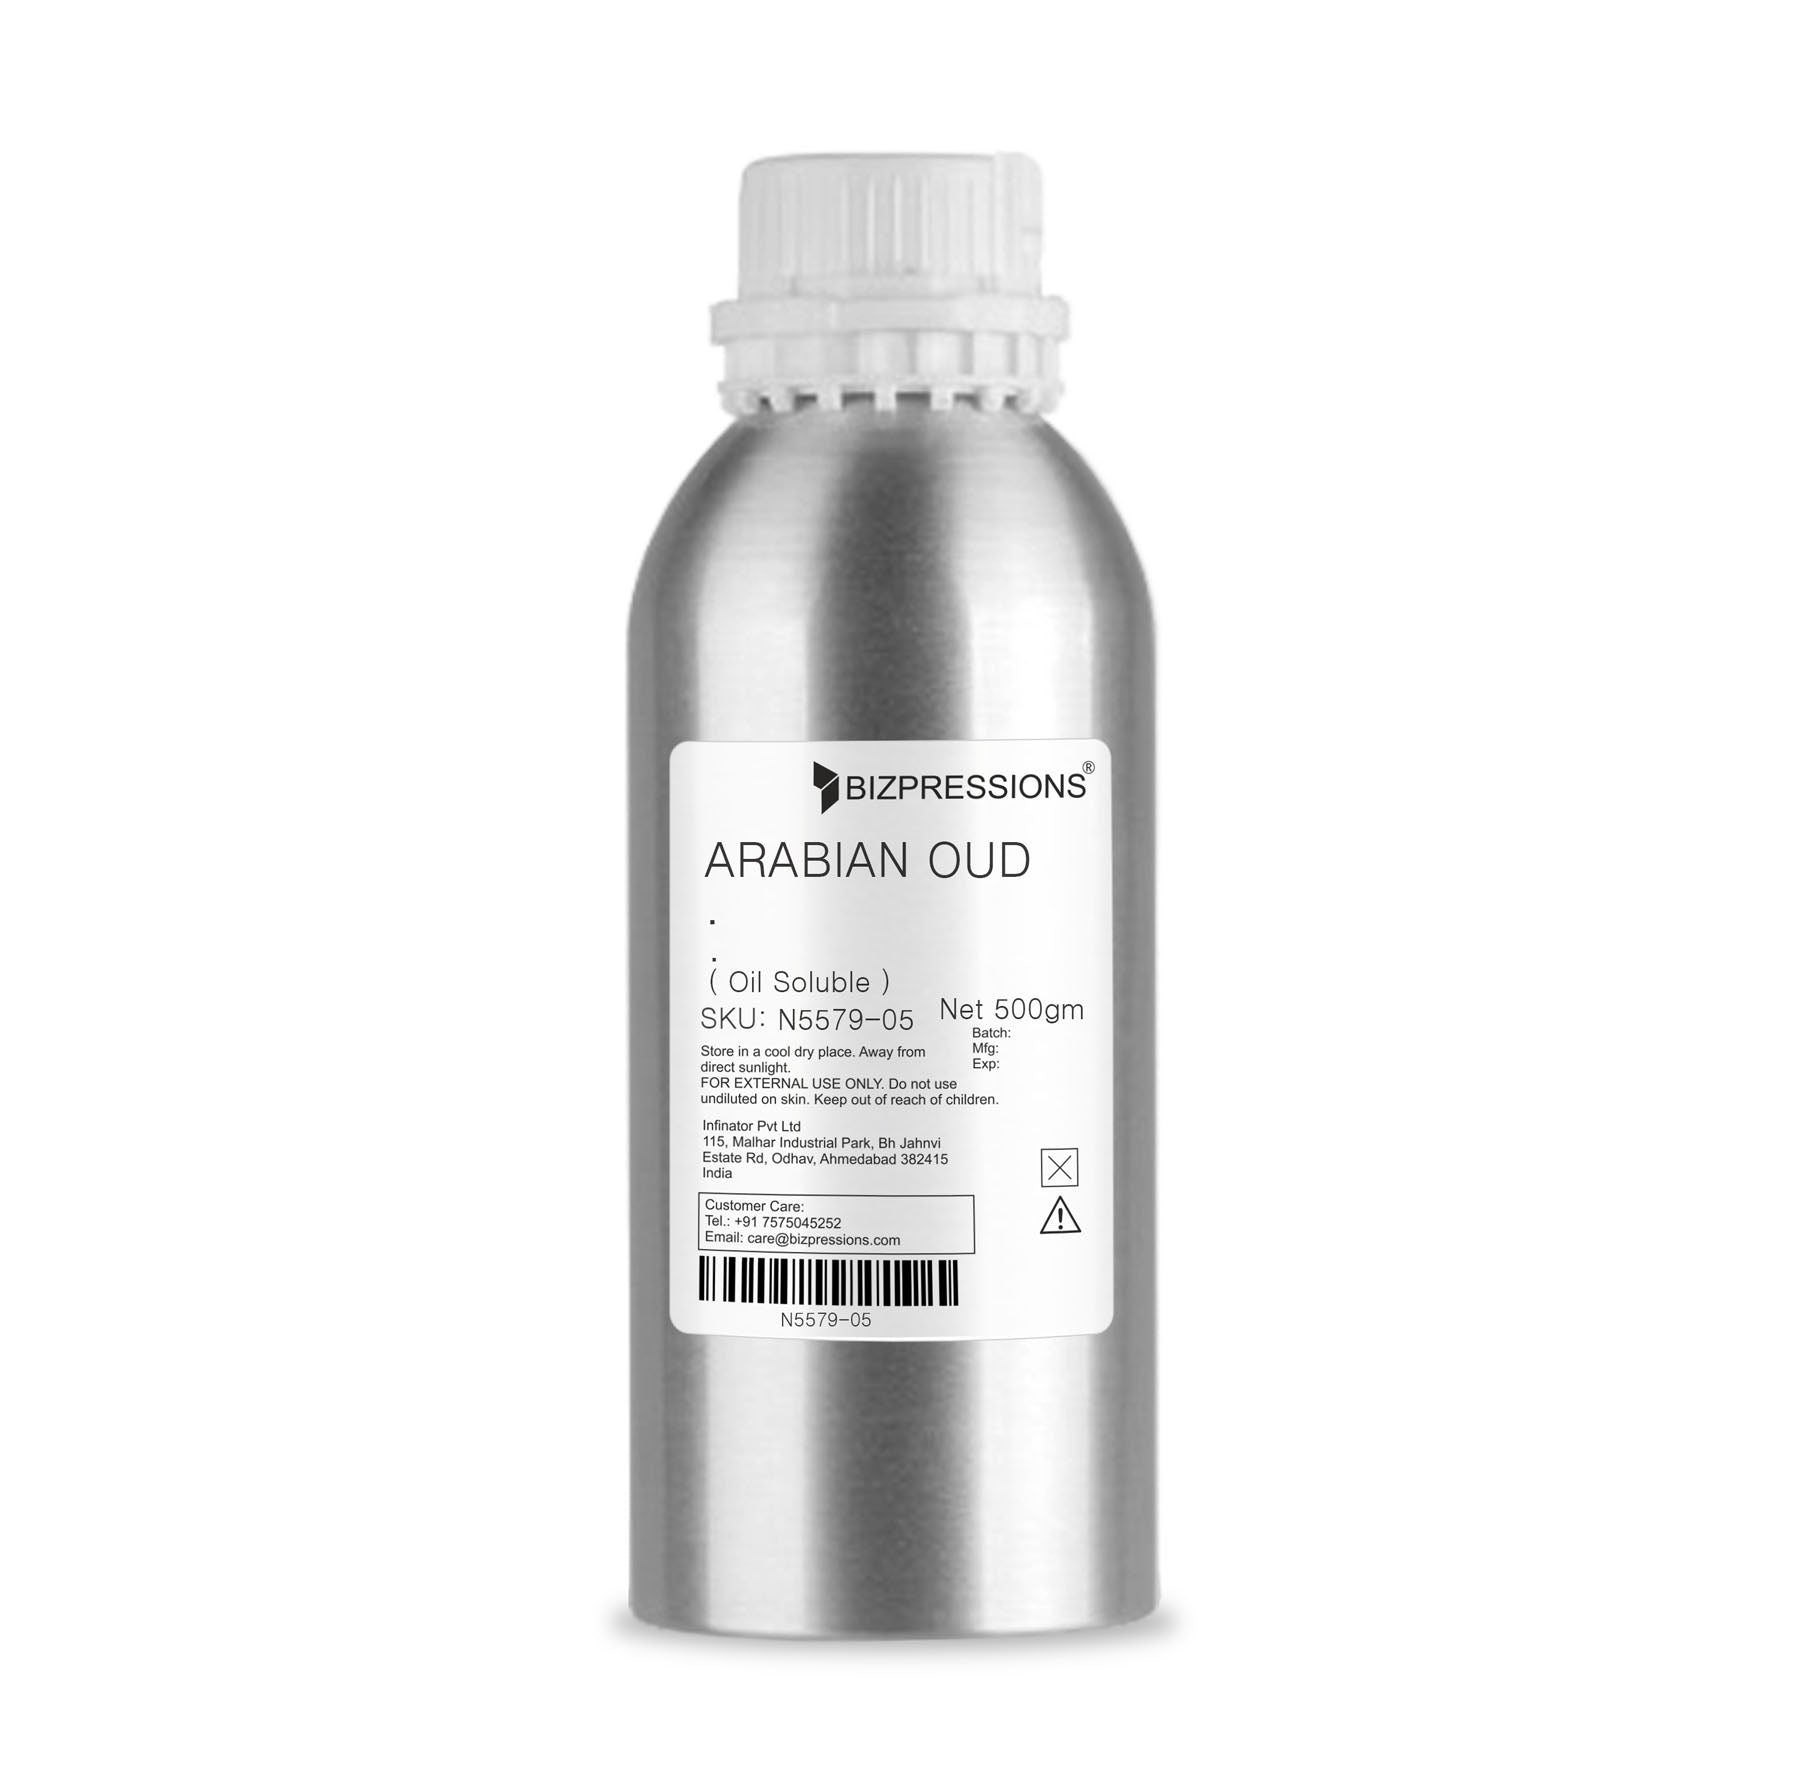 ARABIAN OUD - Fragrance ( Oil Soluble ) - 500 gm